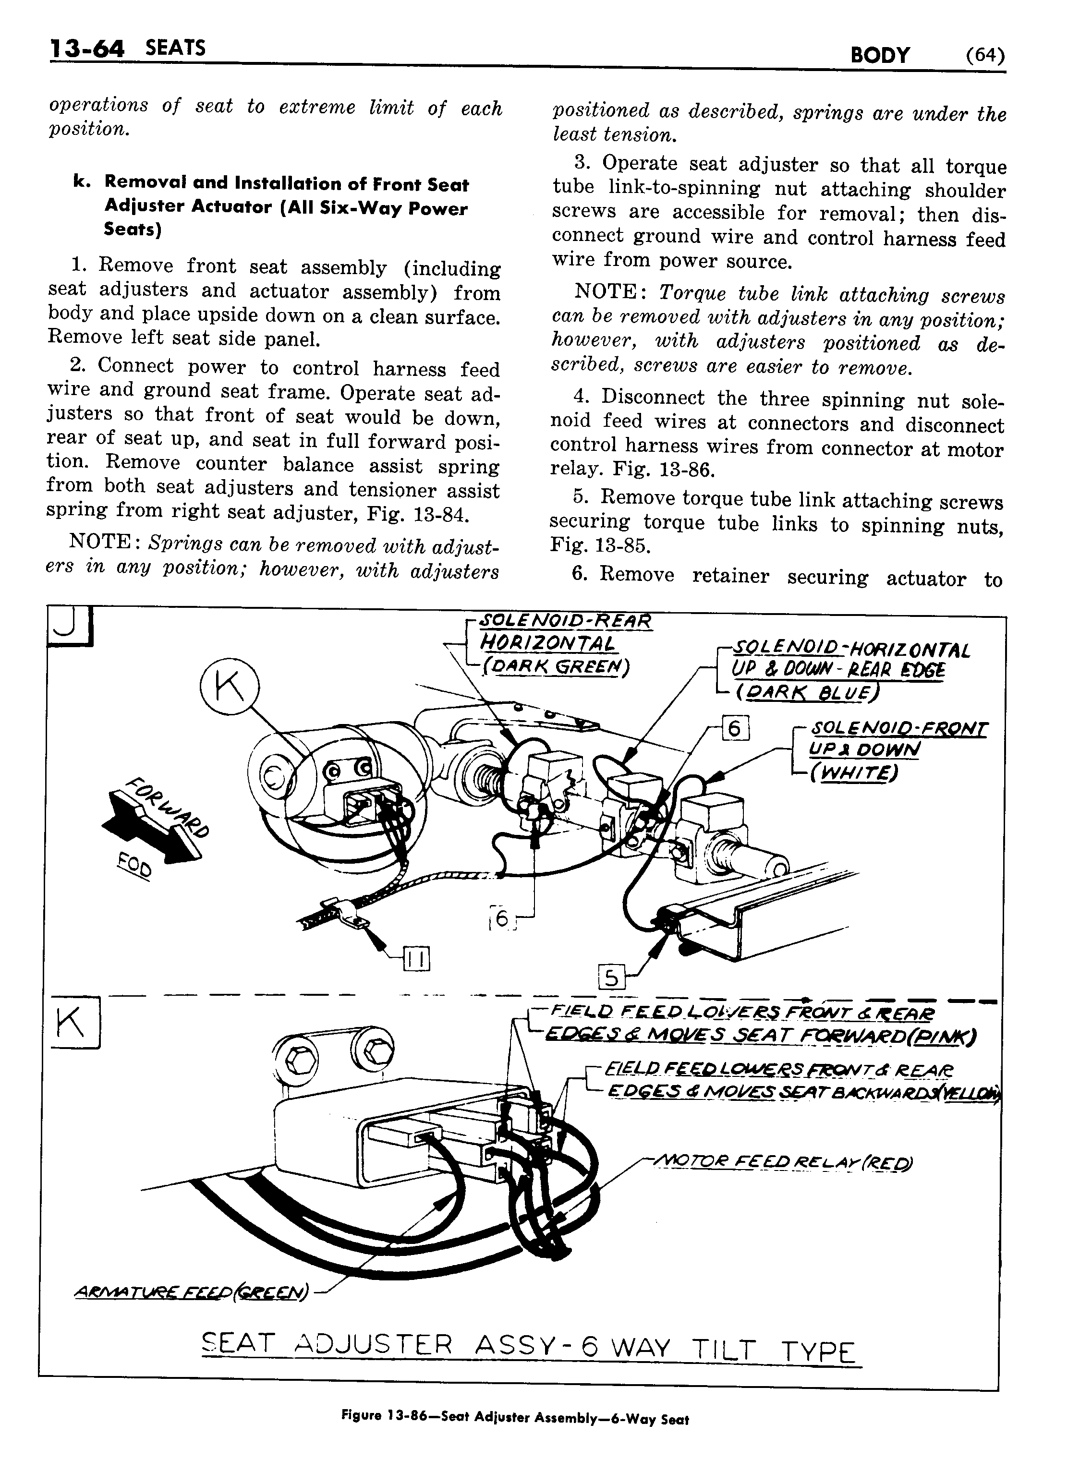 n_1957 Buick Body Service Manual-066-066.jpg